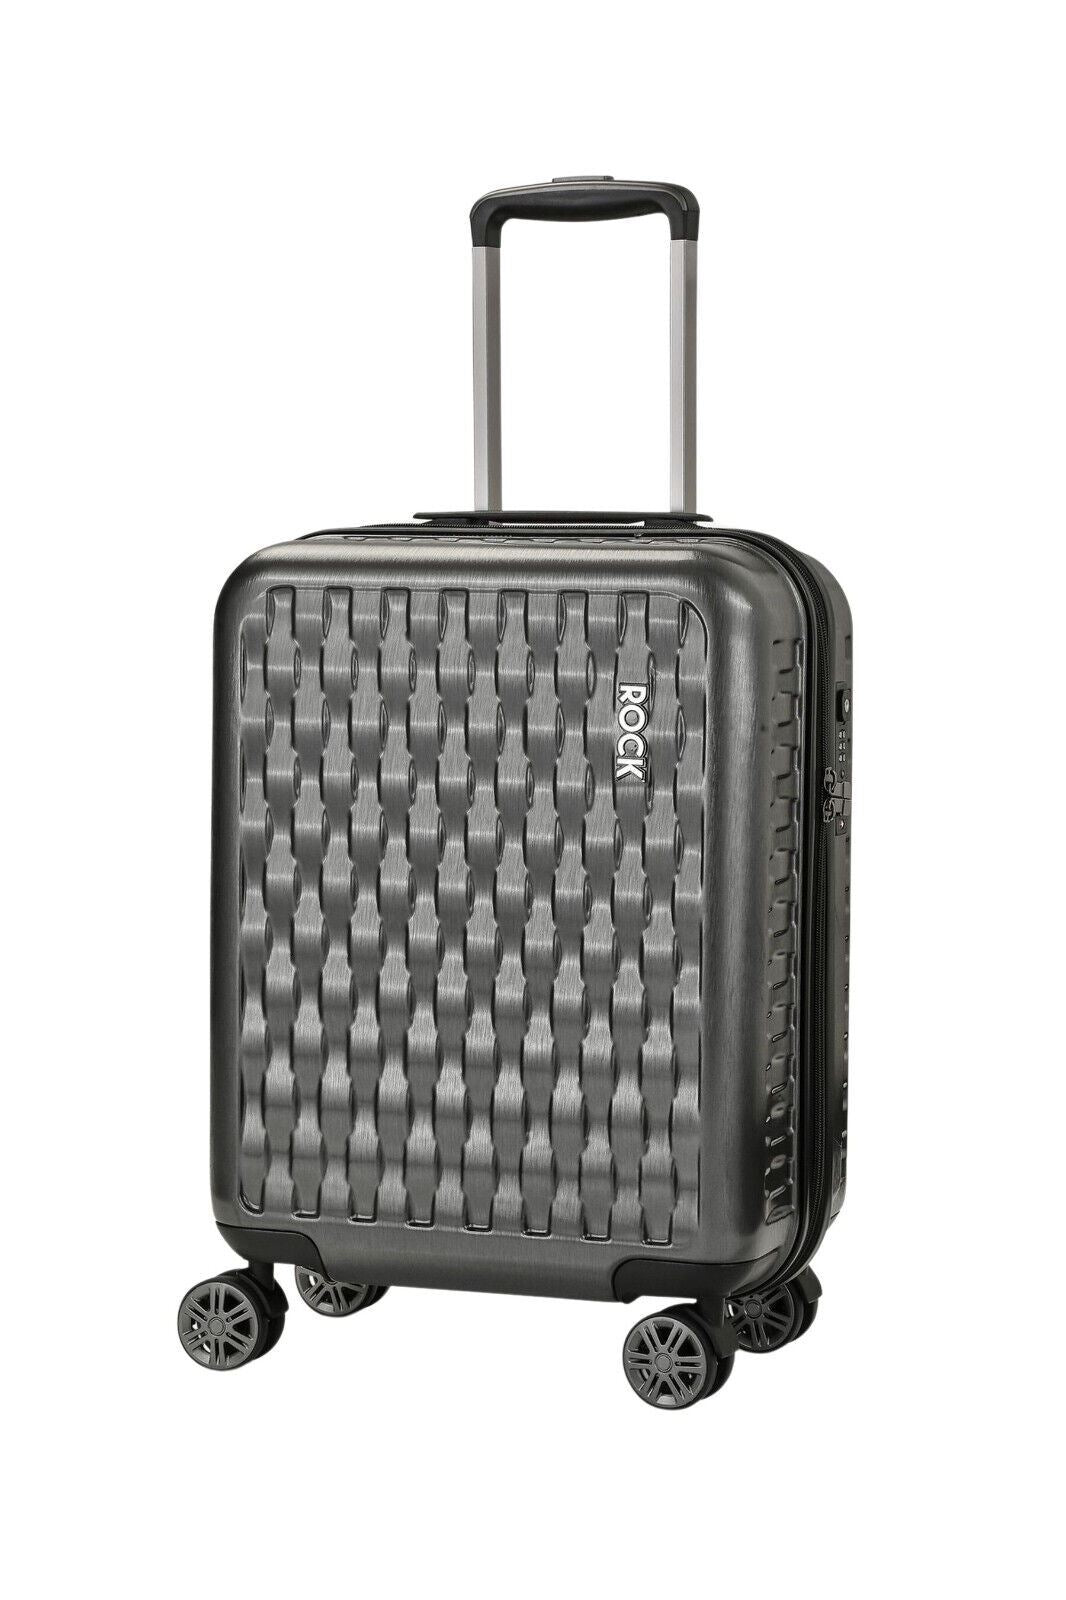 Hard Shell Suitcase 8 Wheel Luggage Trolley Case Holiday Travel Bag